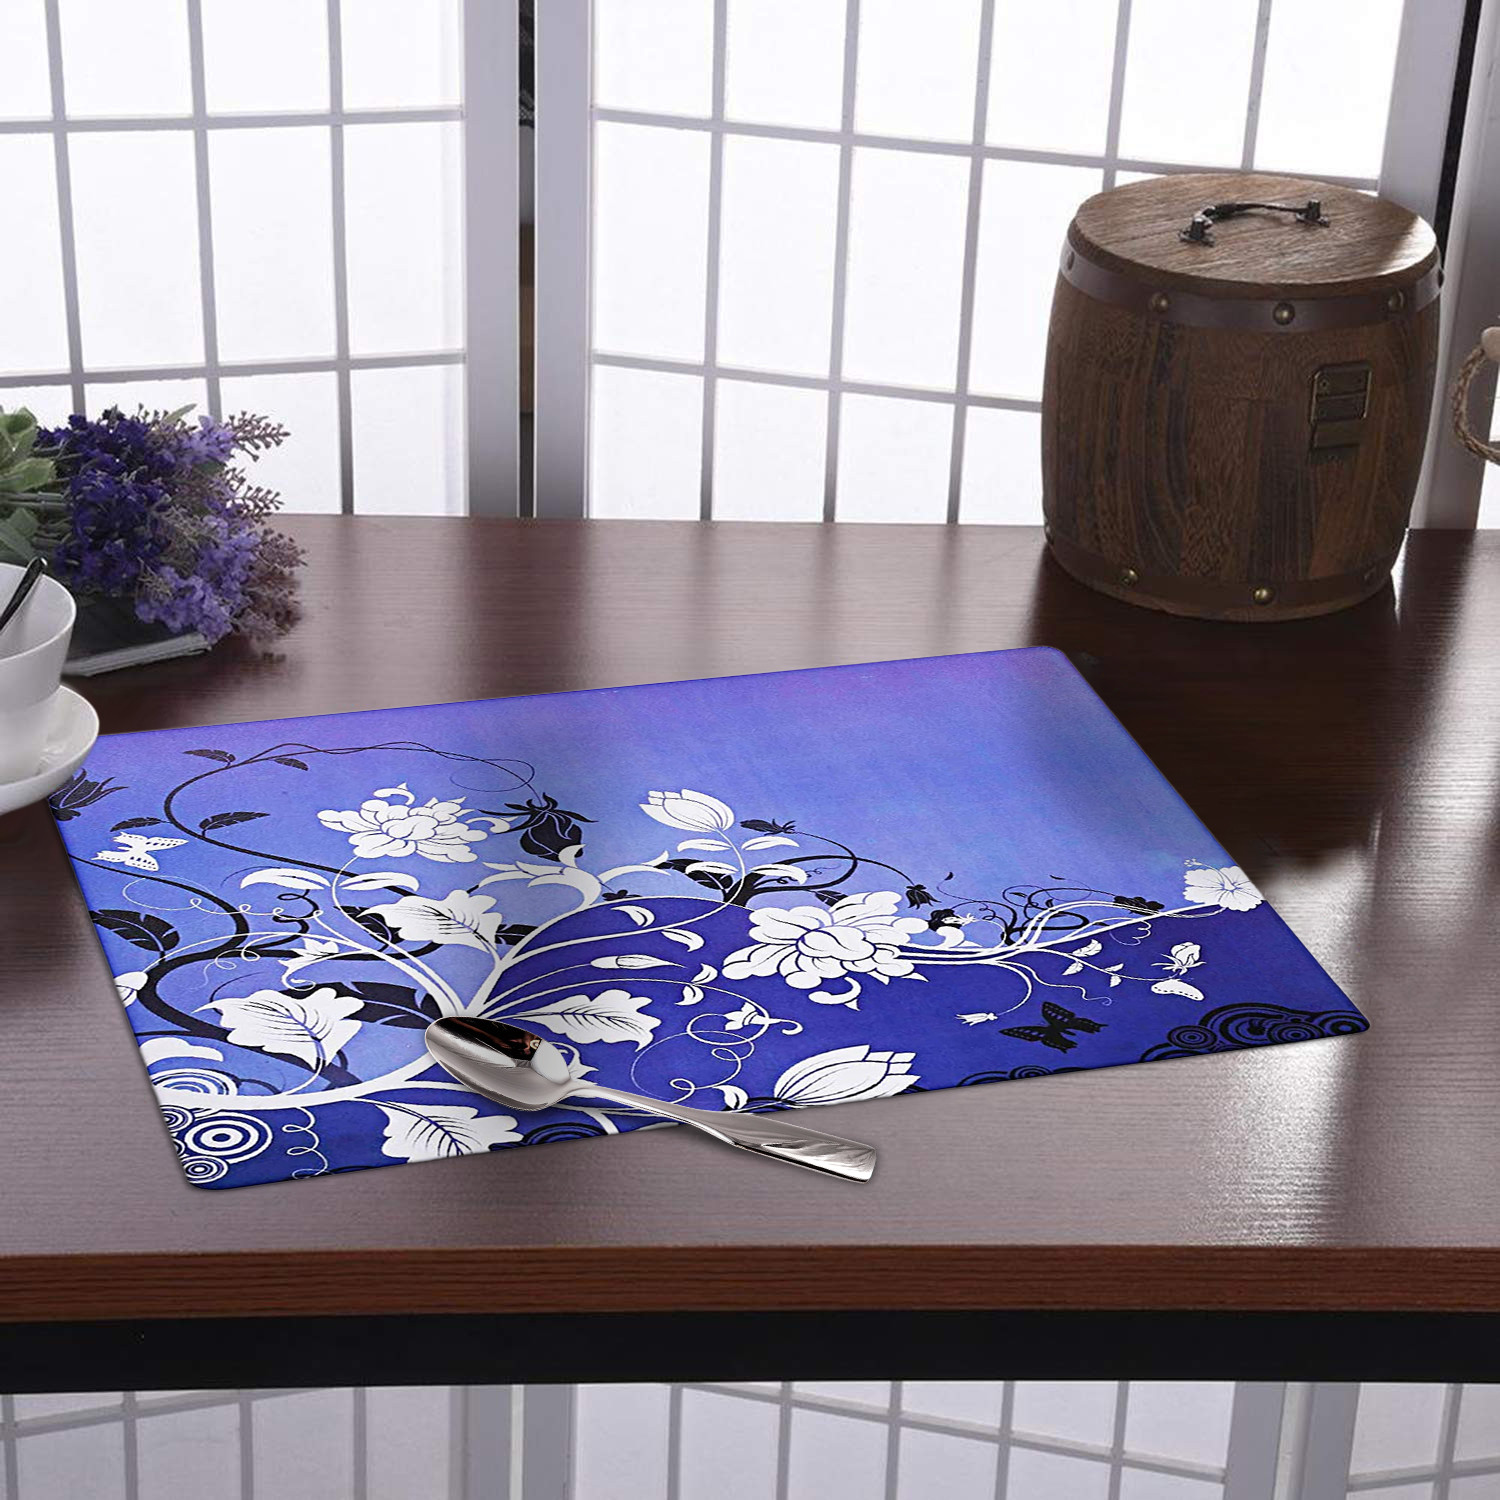 Kuber Industries Floral Print Waterproof, Stain Resistant, Washable Refrigerator/Fridge Drawer Mat, Set of 6 (Blue)